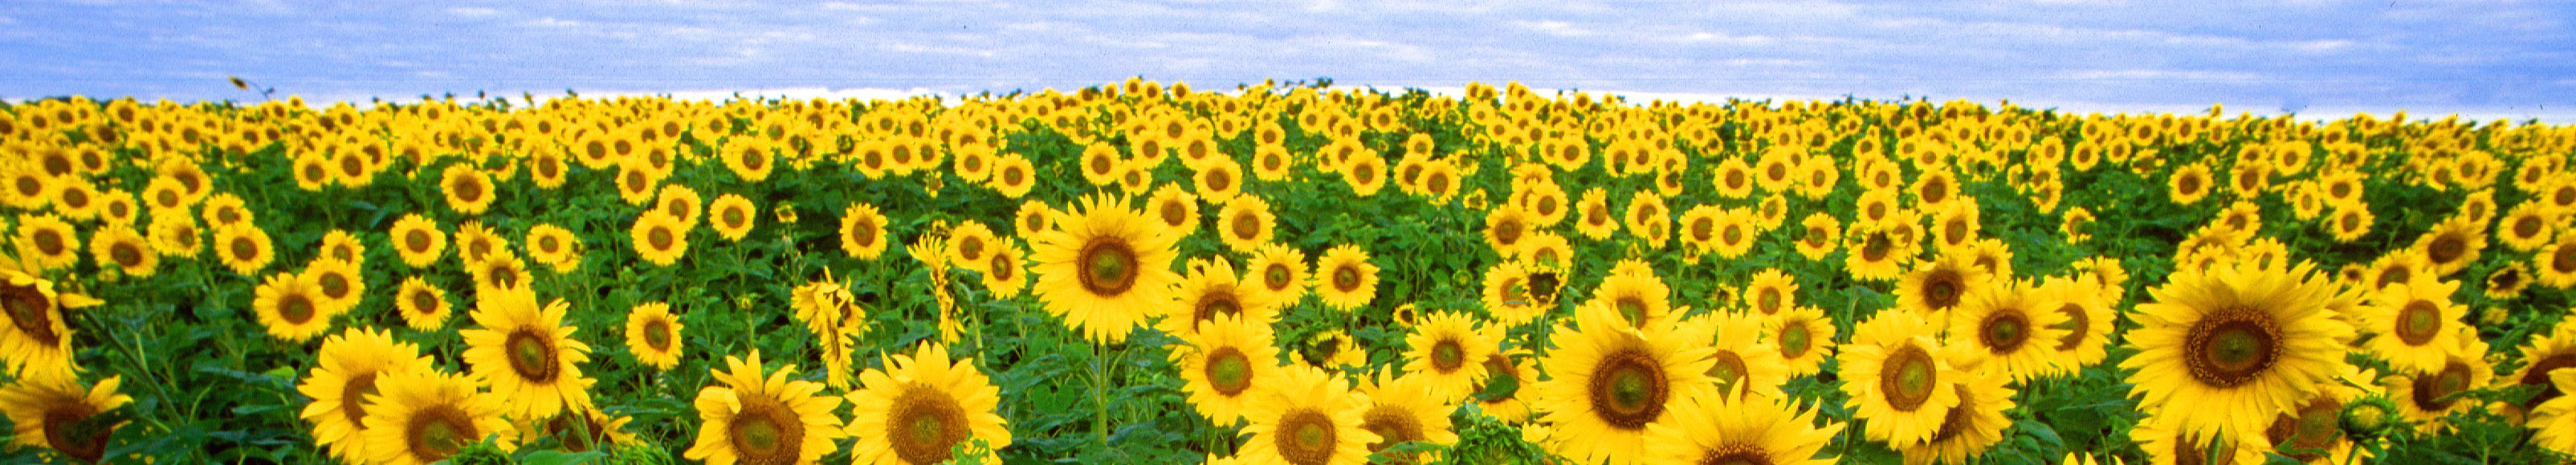 images/sunflowers.jpg